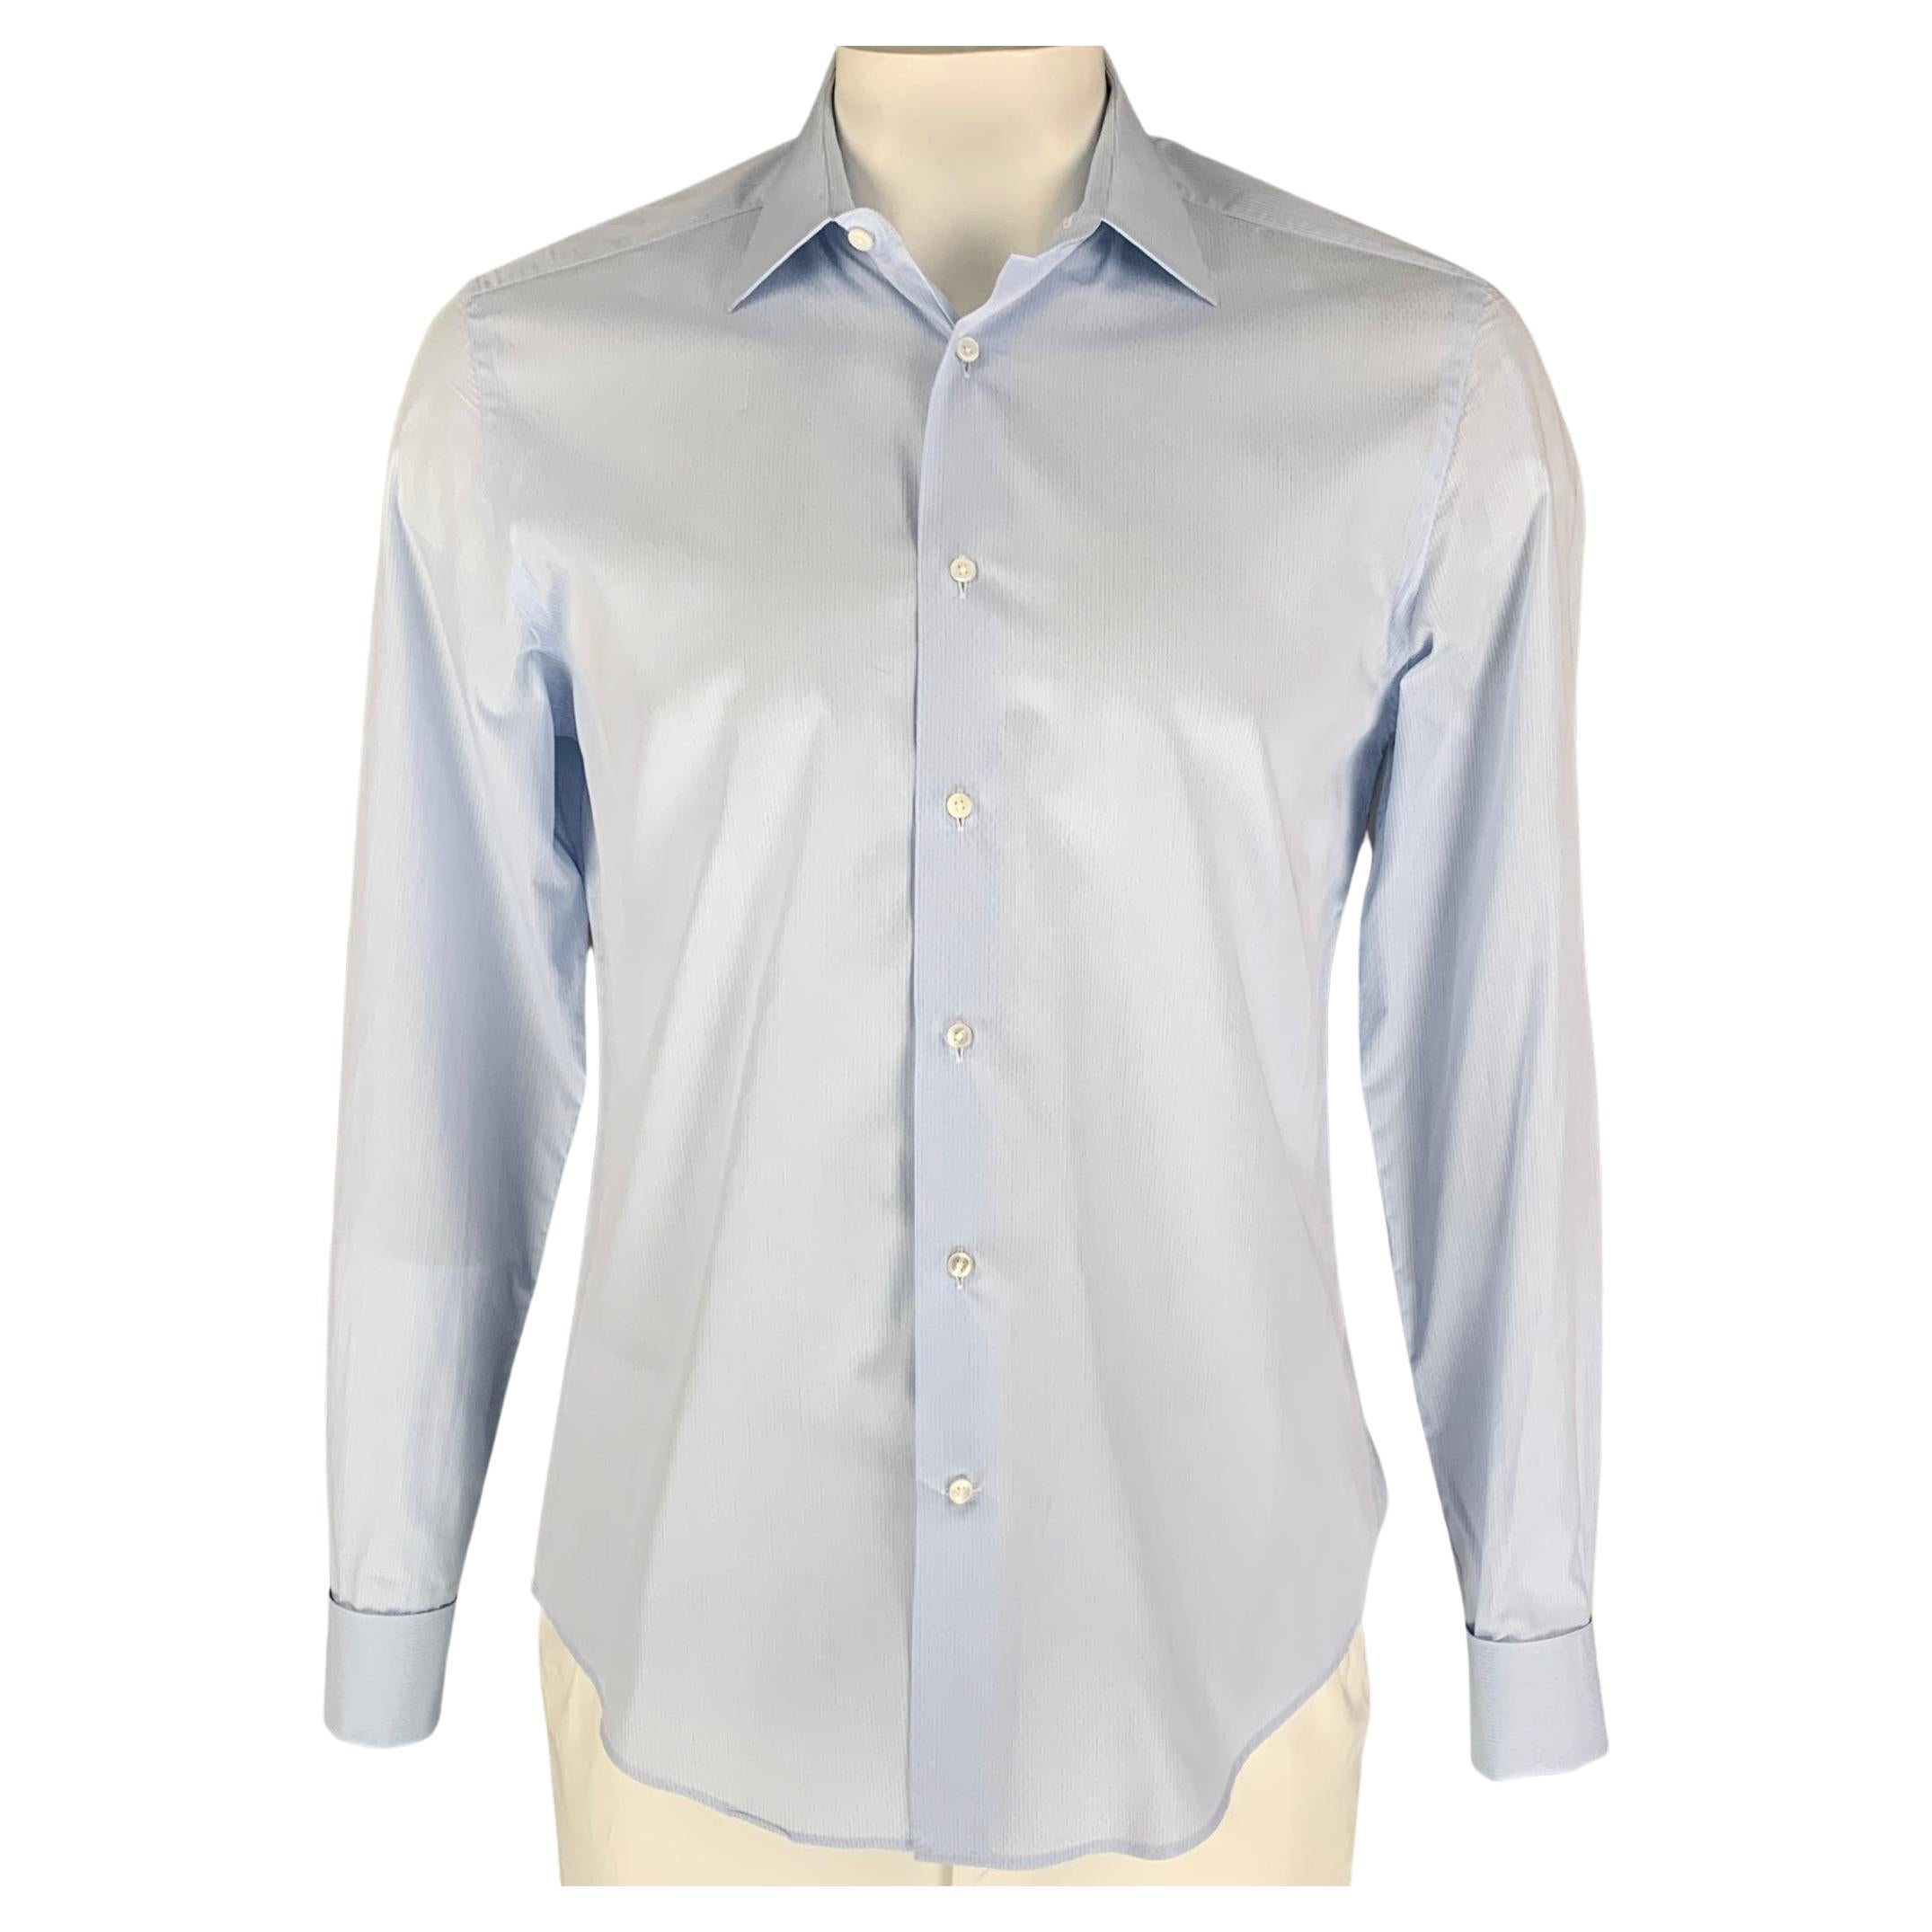 LOUIS VUITTON Size L Light Blue Print Cotton Fitted Long Sleeve Shirt